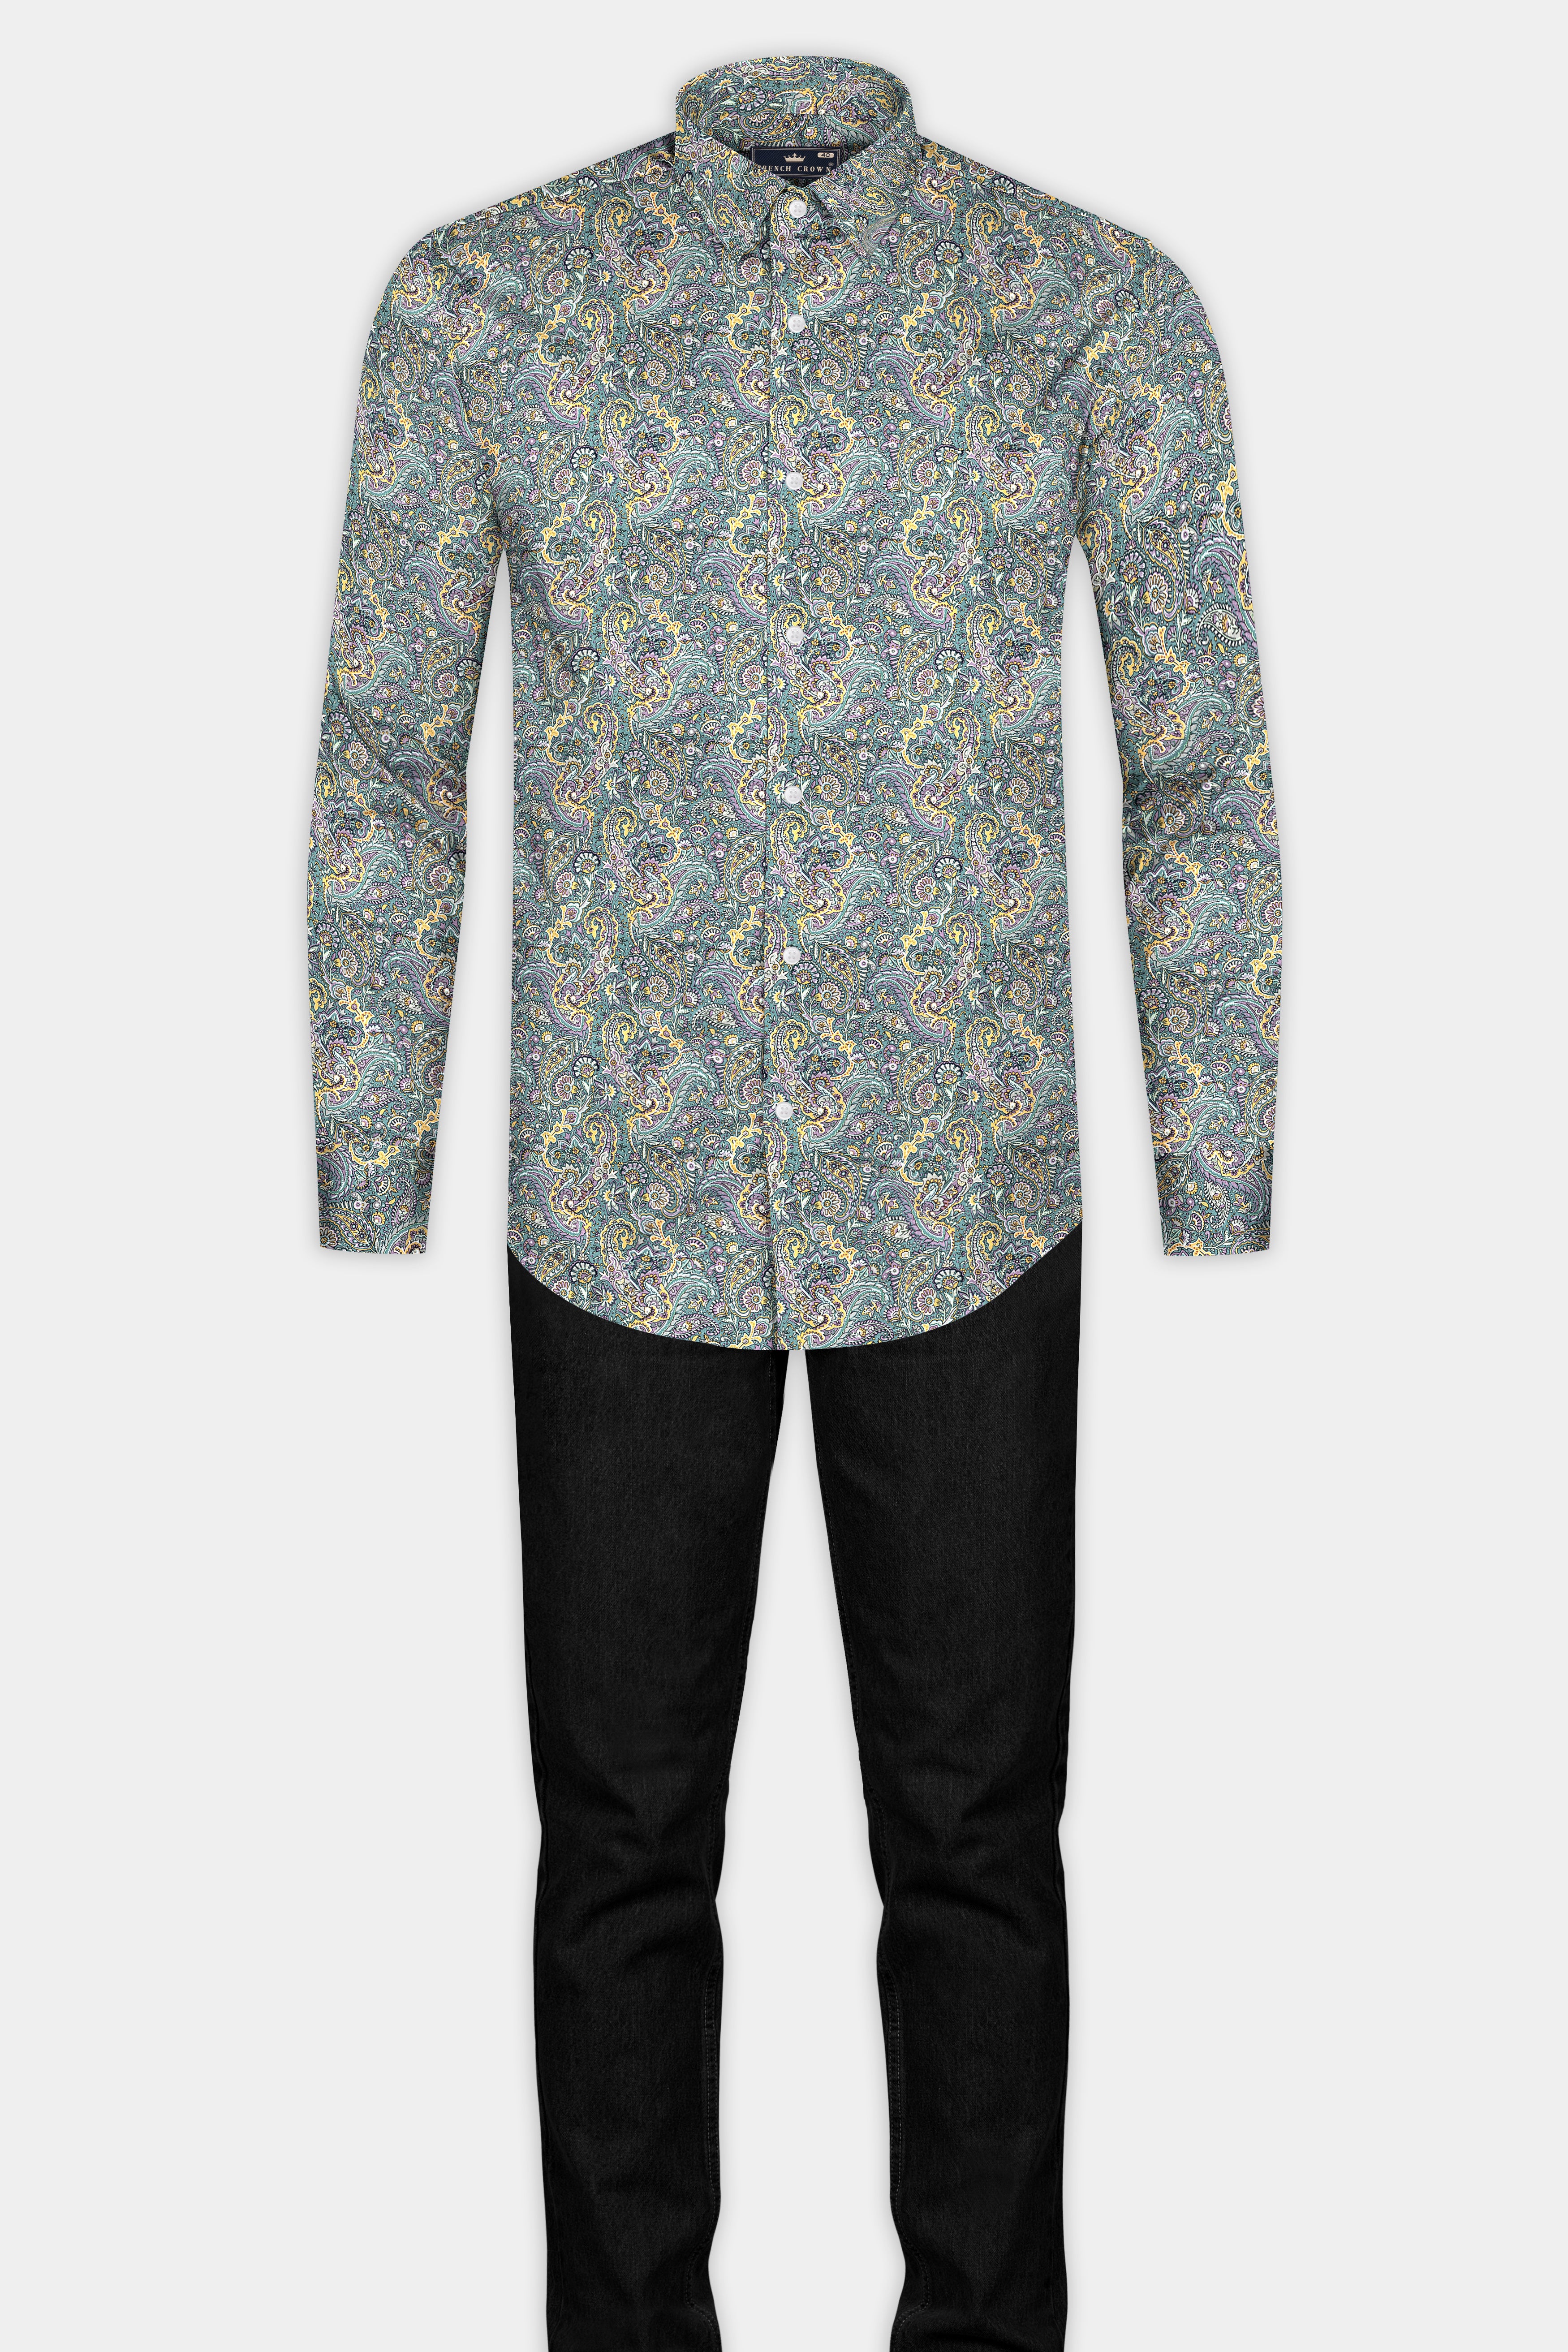 Northern Green And Lilac Multicolour Print Subtle Sheen Super Soft Premium Cotton Shirt